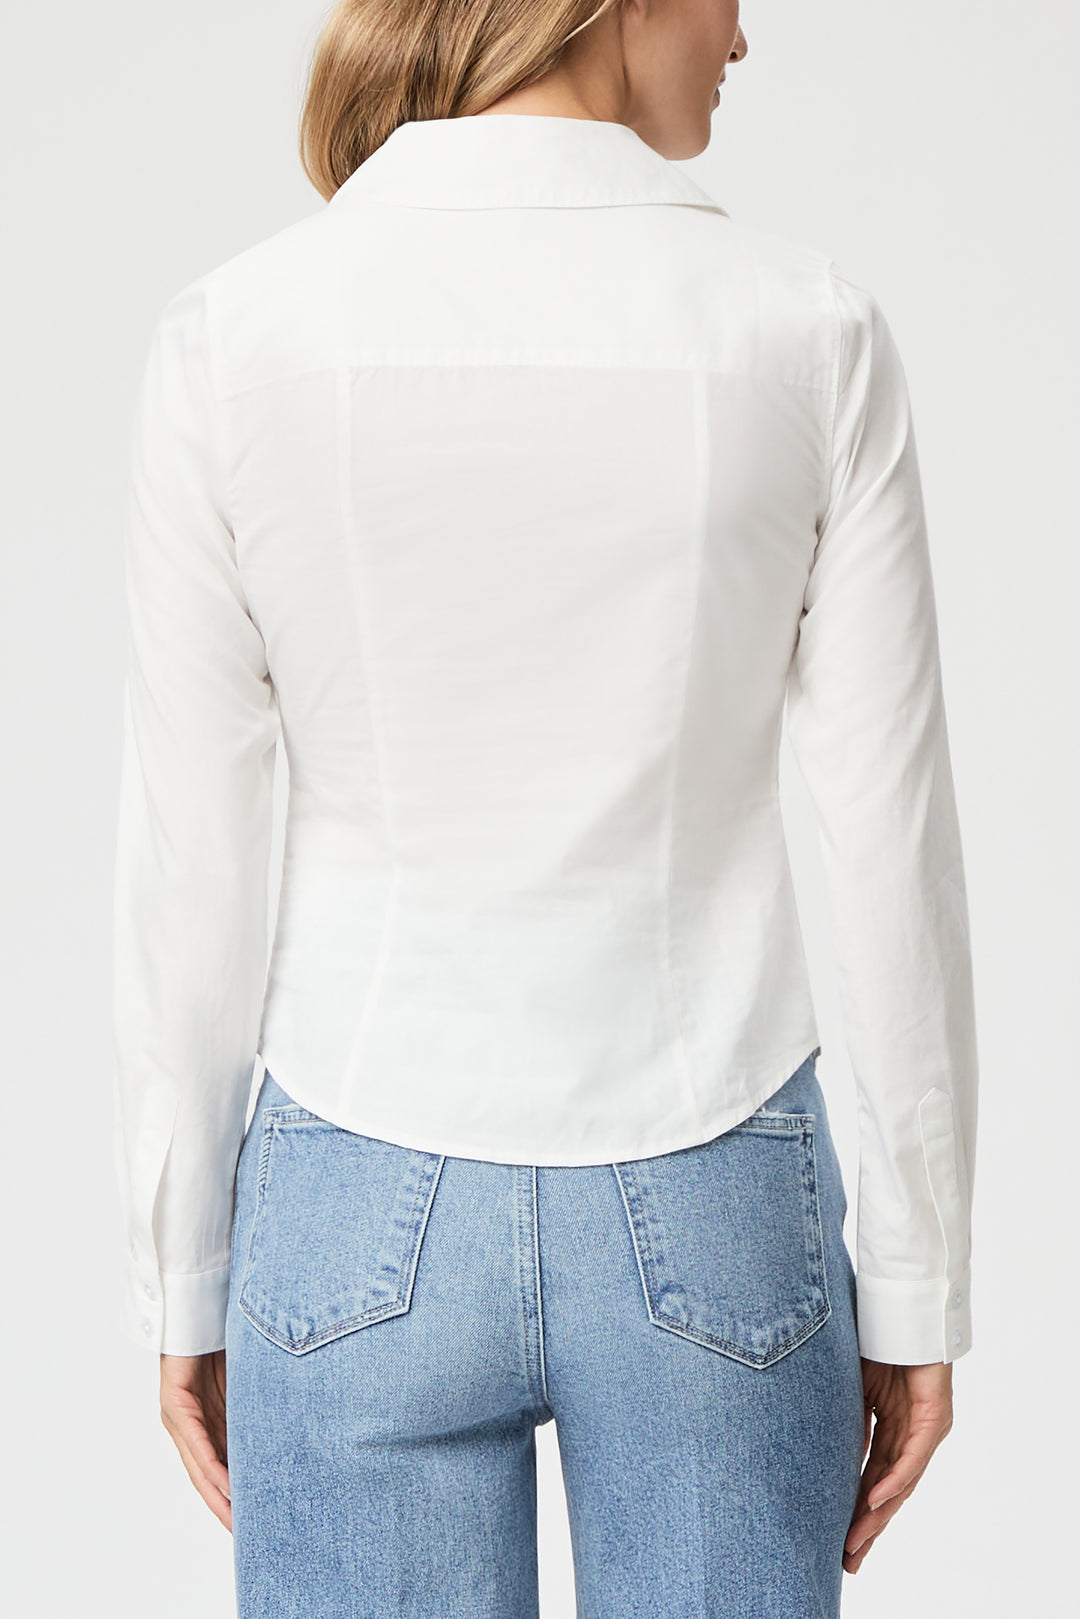 Paige Premium Denim - Alera Shirt in White